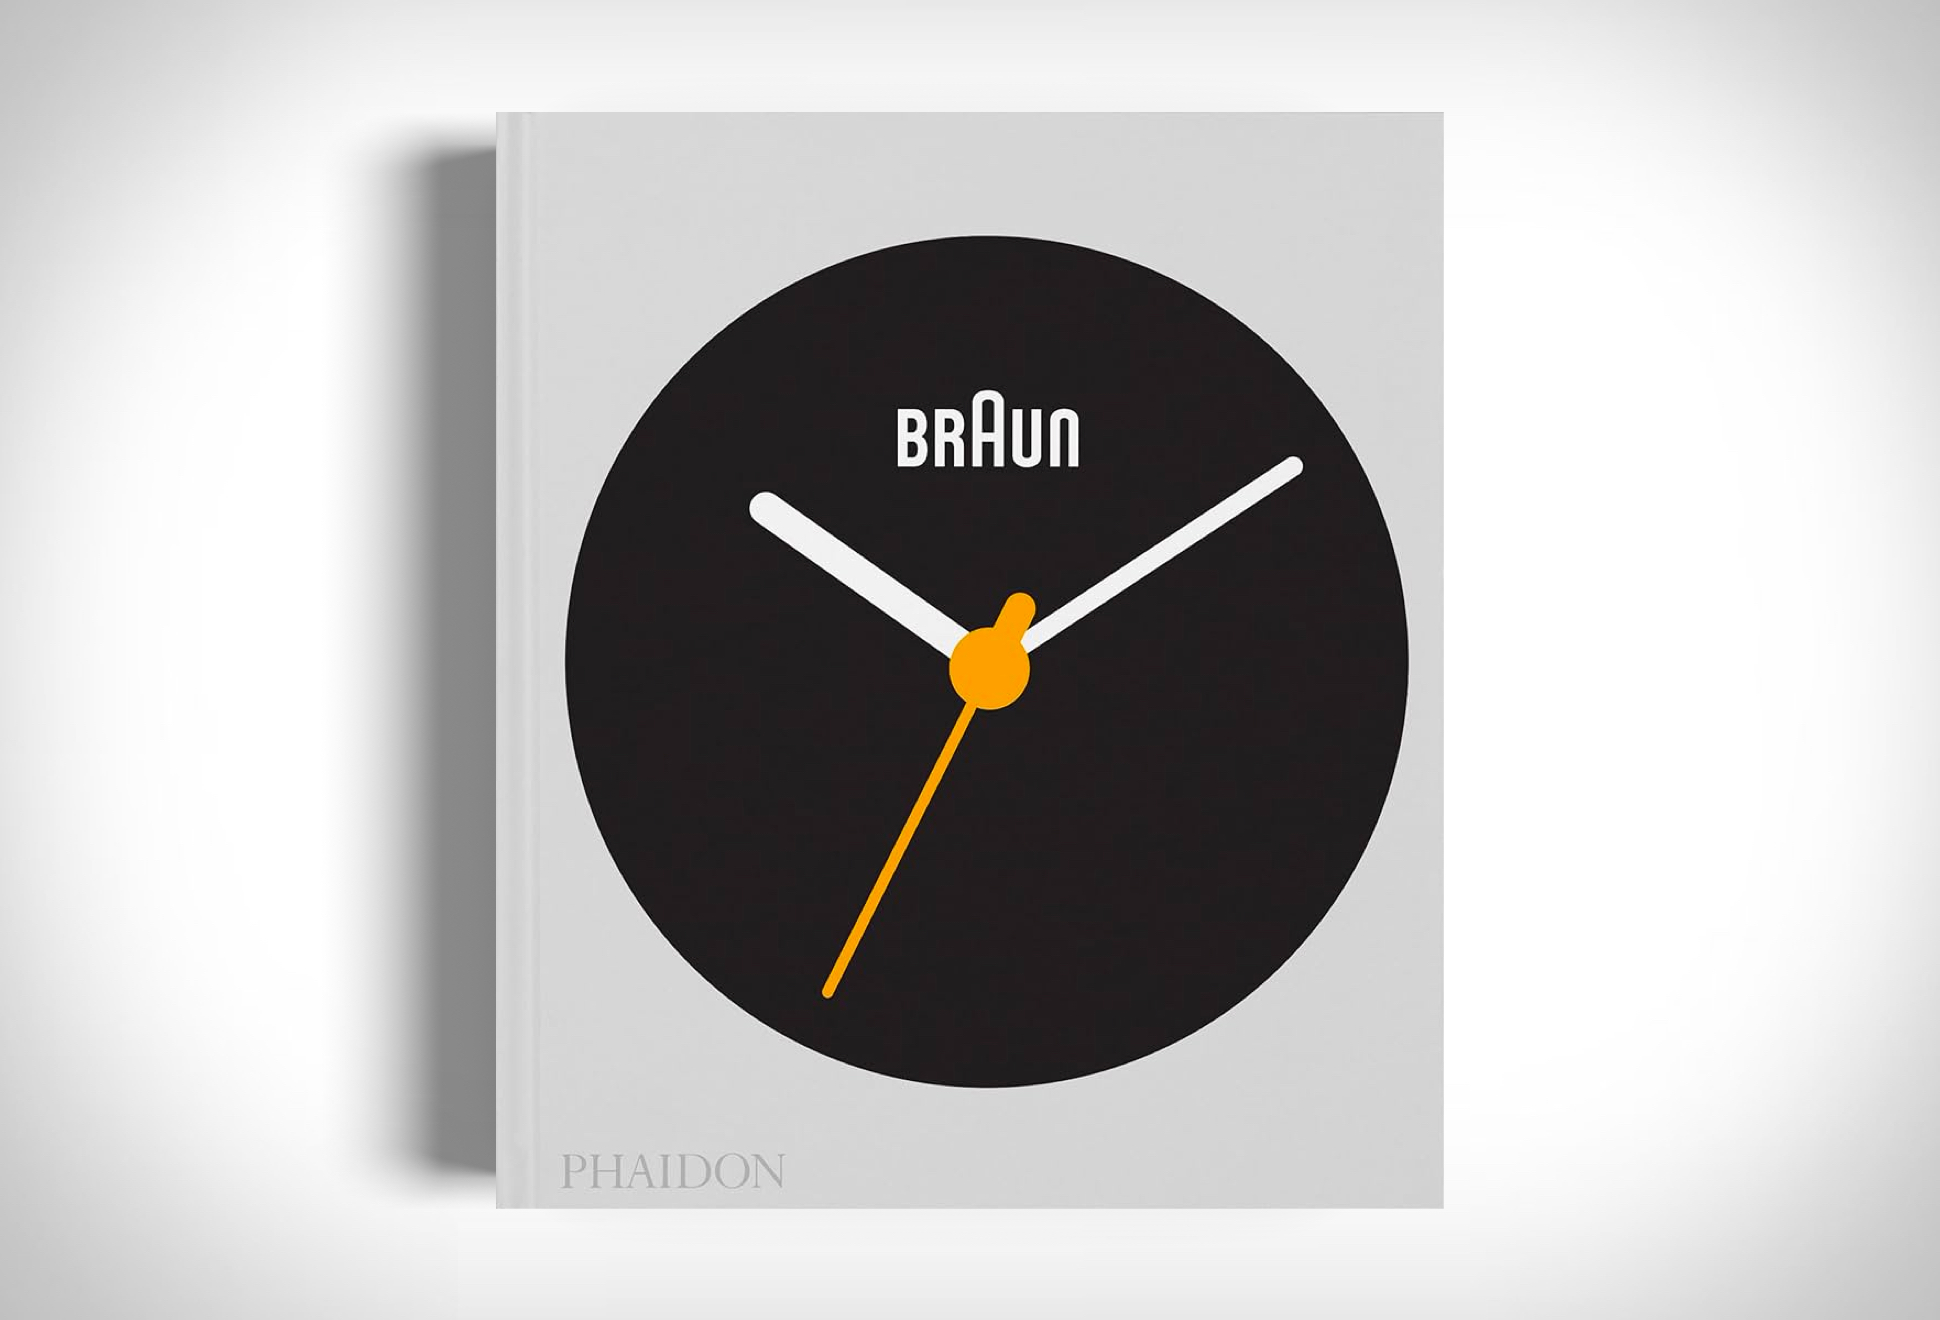 Braun: Designed to Keep - Image